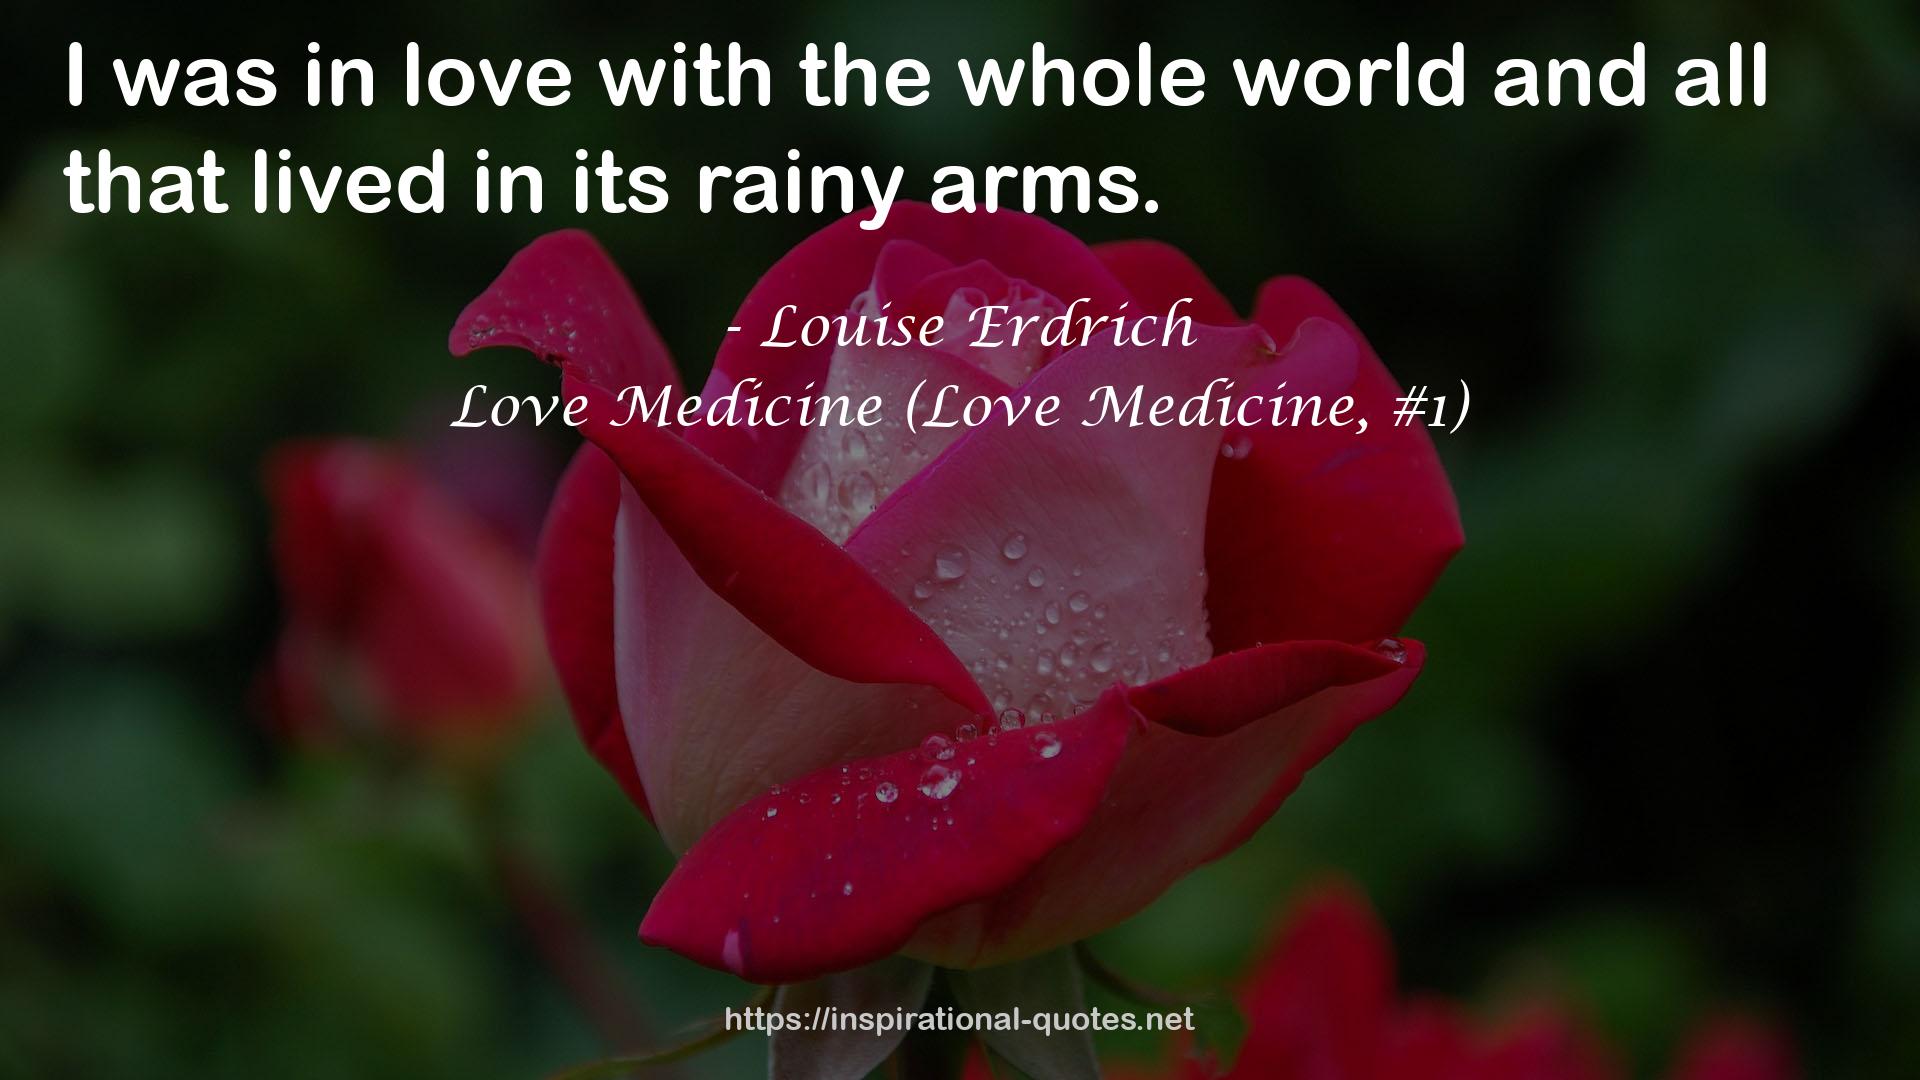 Love Medicine (Love Medicine, #1) QUOTES